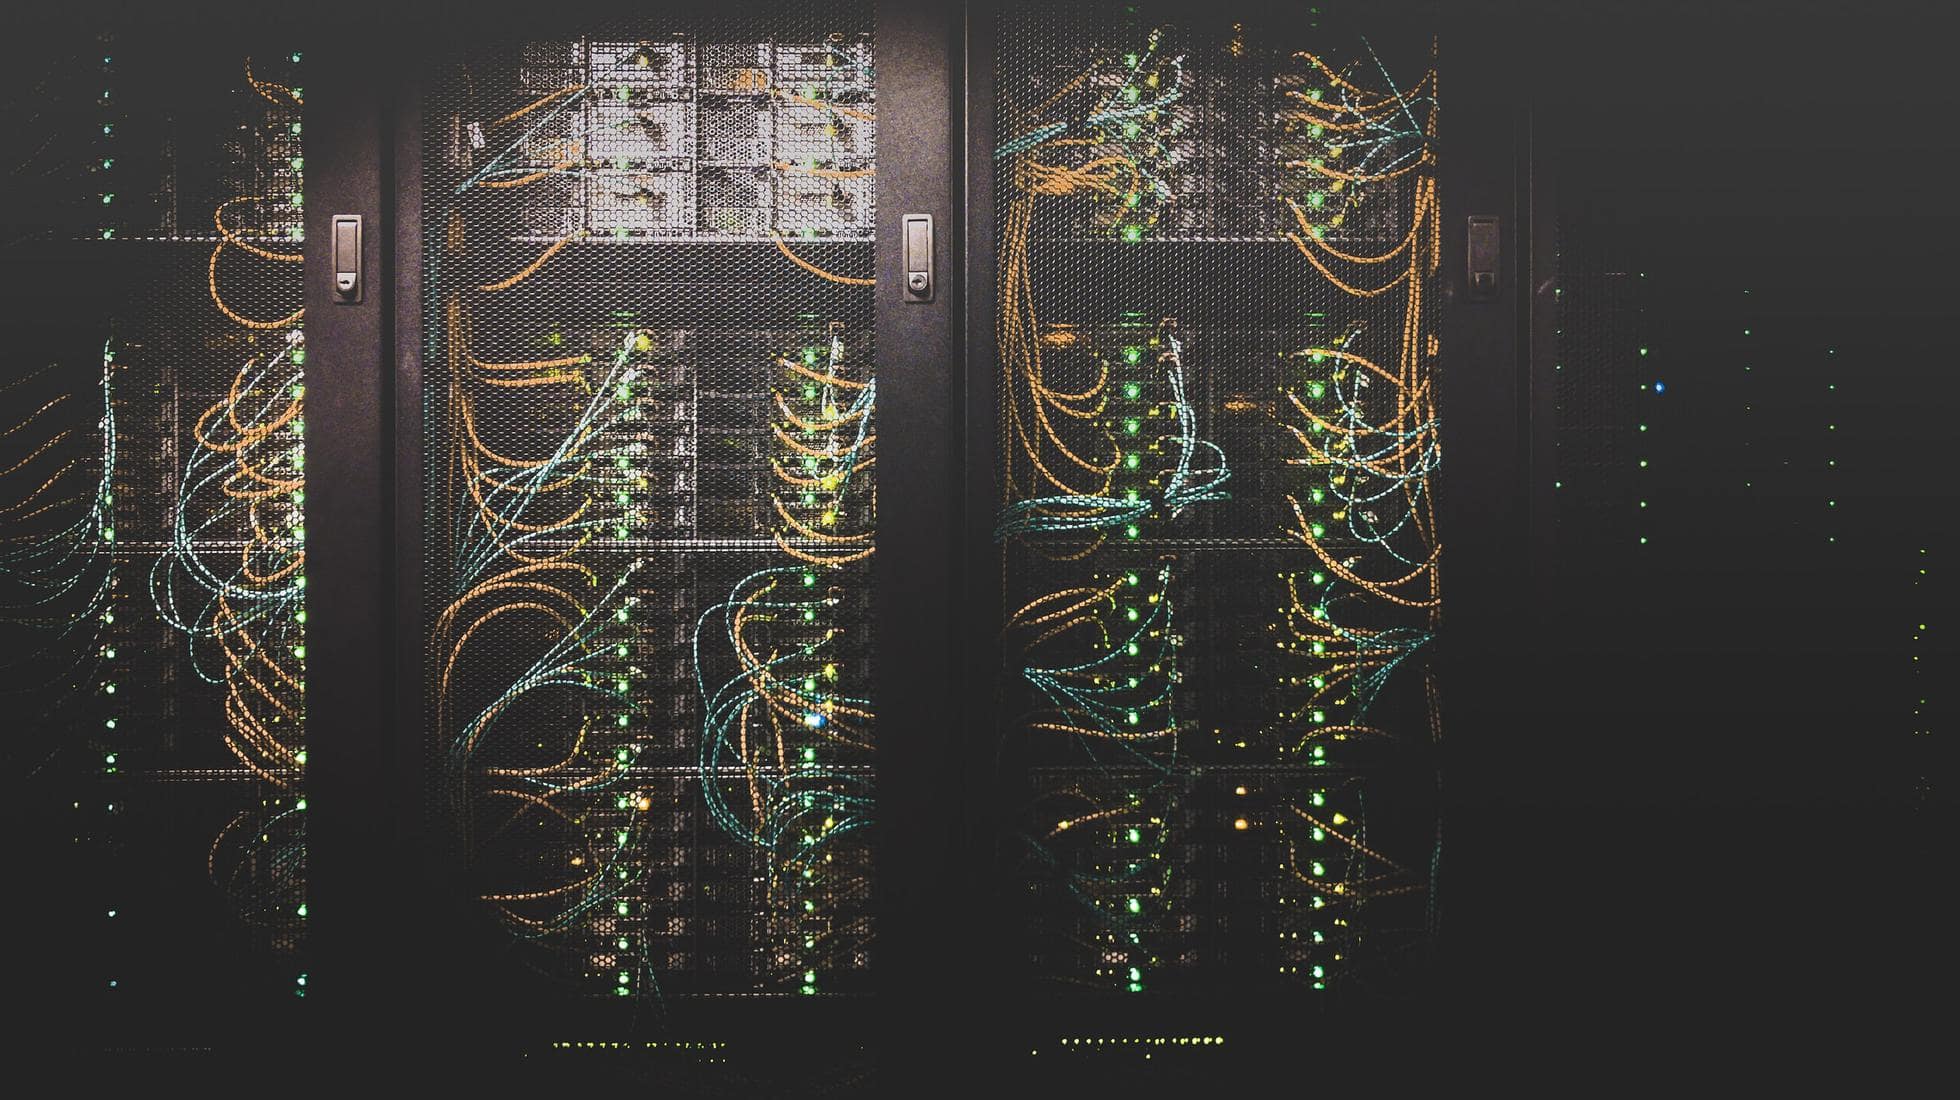 Server rack